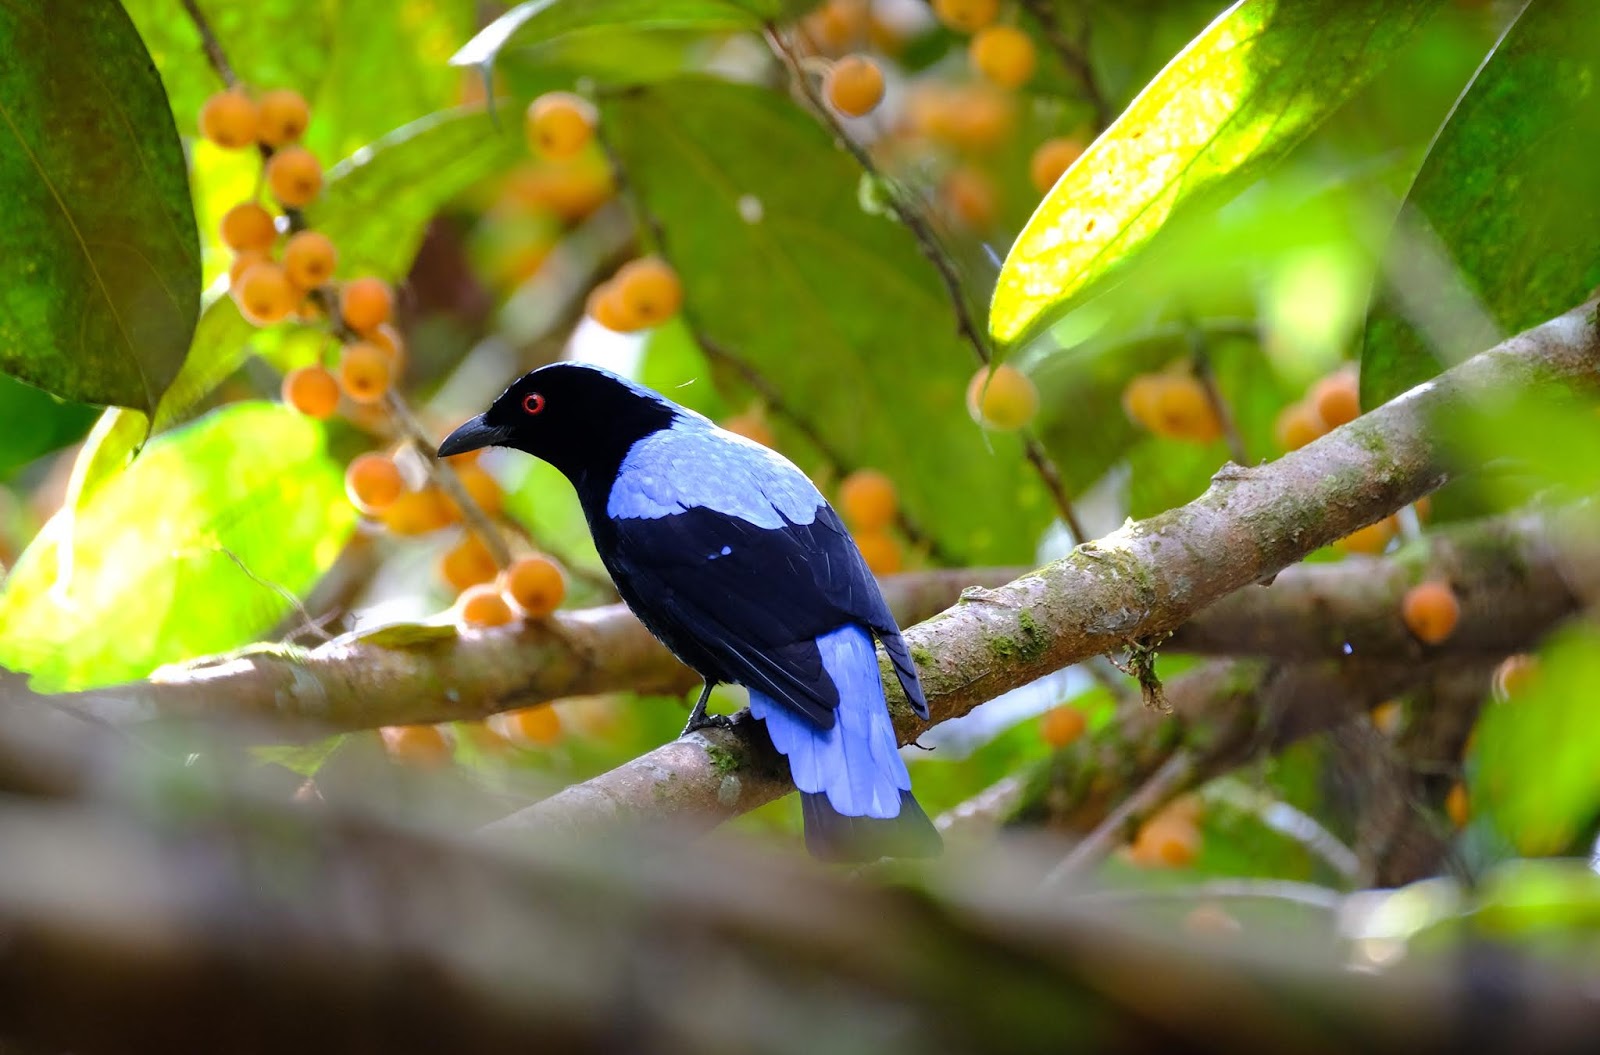 Mike Is The Name Birding Is The Game ( Birding In Malaysia - Malaysian Birds  In Photos ): Avian Sighting November 2019 - Asian Fairy Bluebird